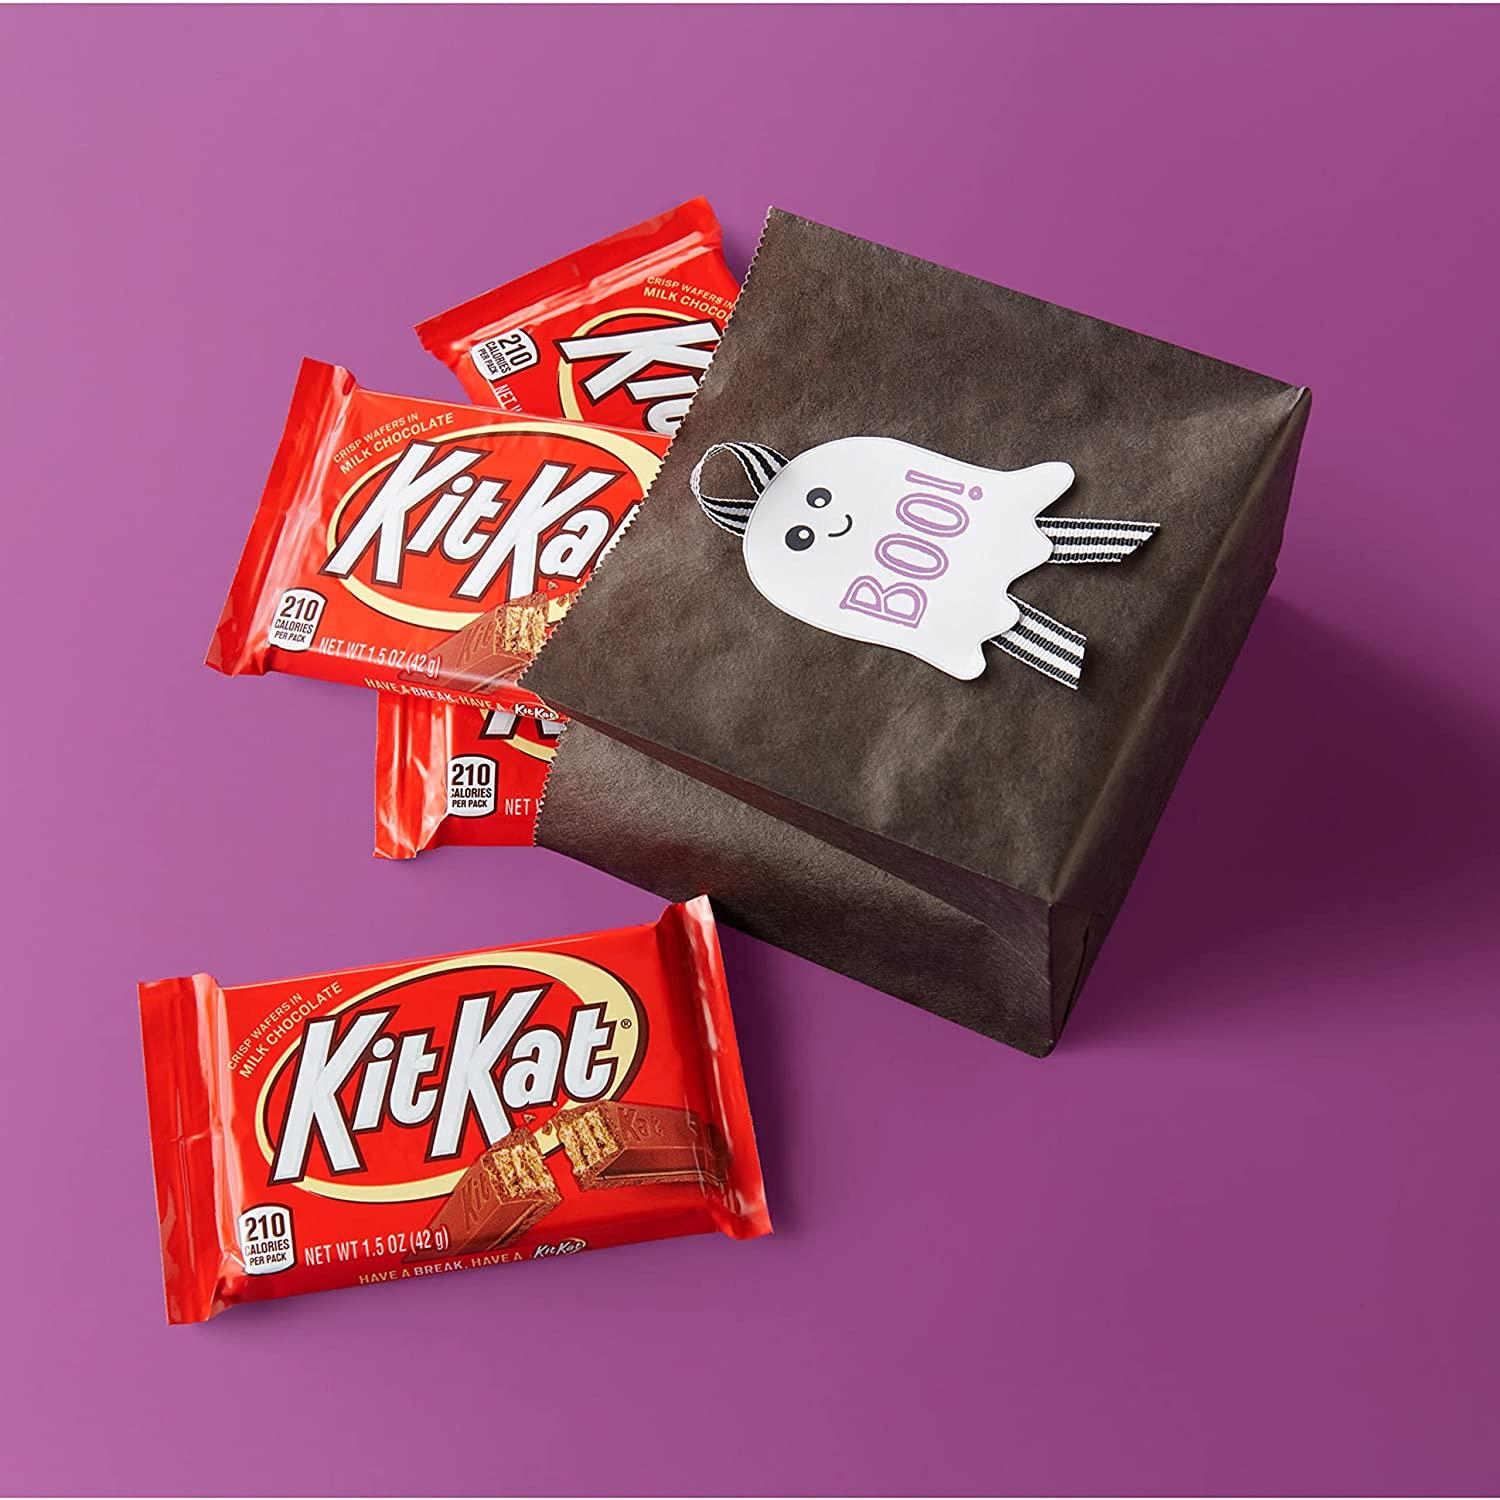 Kit Kat Crisp Wafers, in Dark Chocolate - 24 pack, 1.5 oz pkgs